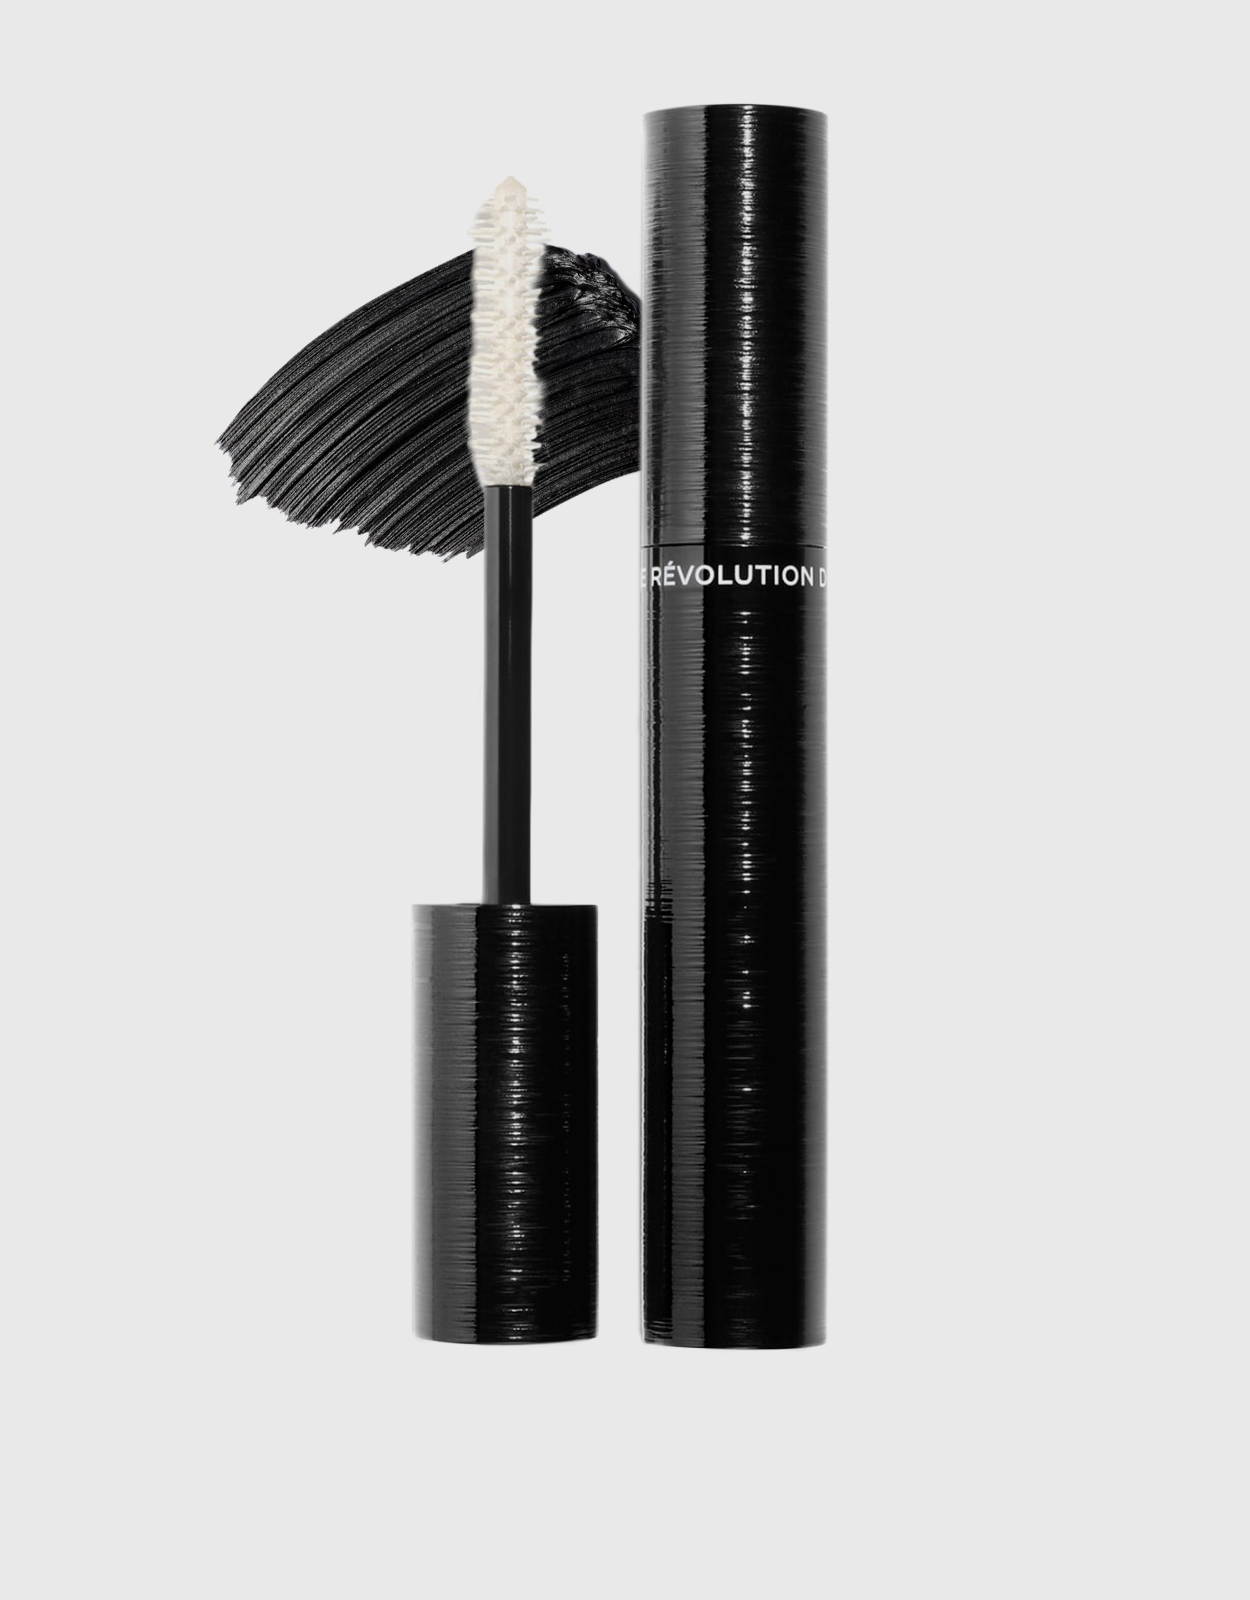 Beauty Le Volume Revolution De Chanel Brush Mascara-Noir (Makeup,Eye,Mascara) IFCHIC.COM